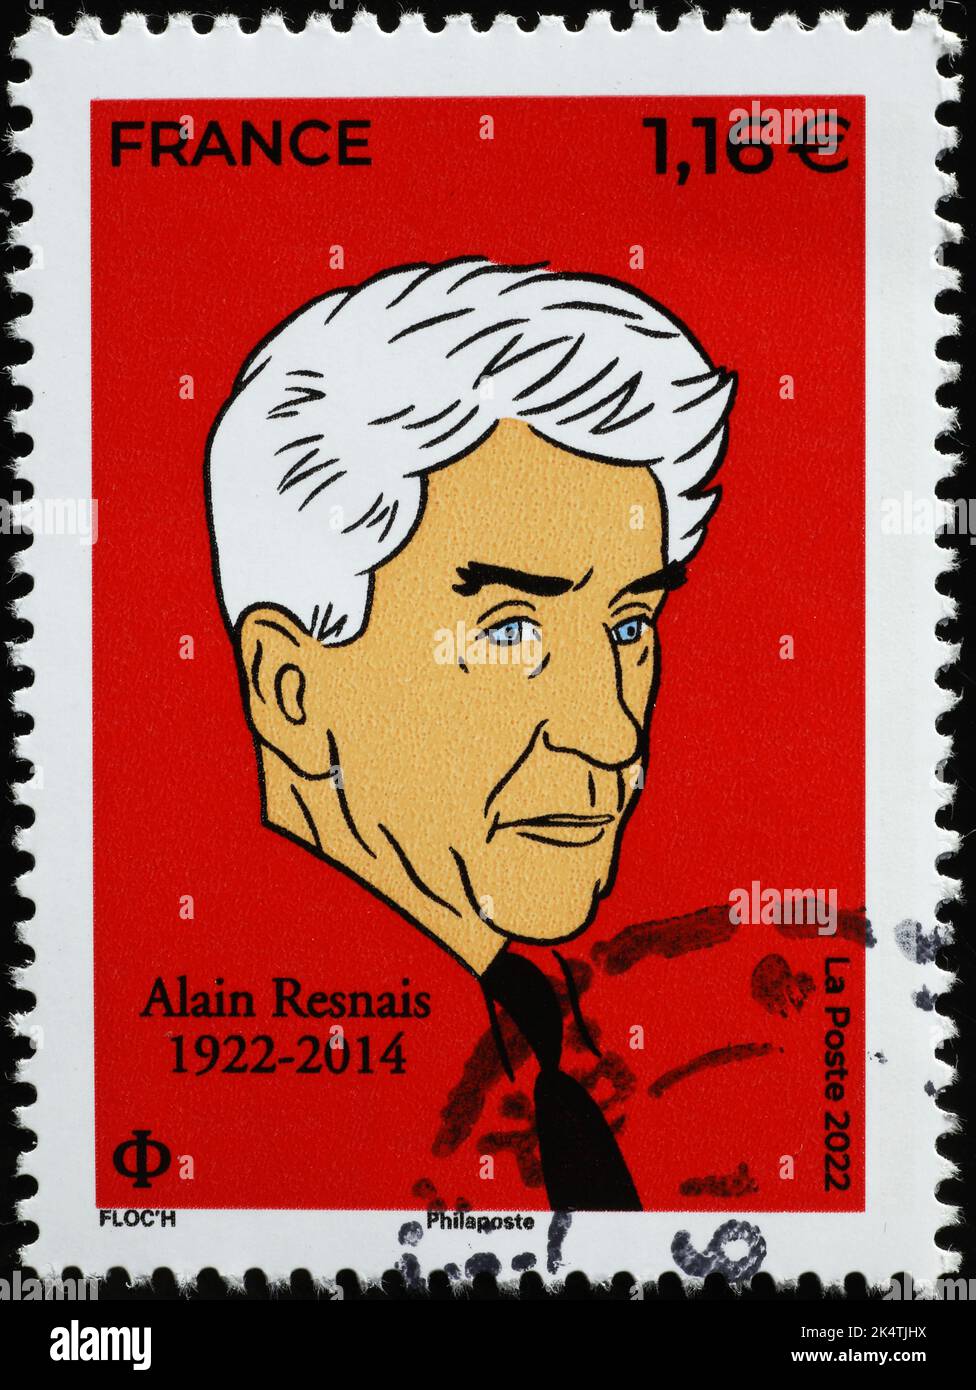 Alain Resnais portrait on french postage stamp Stock Photo